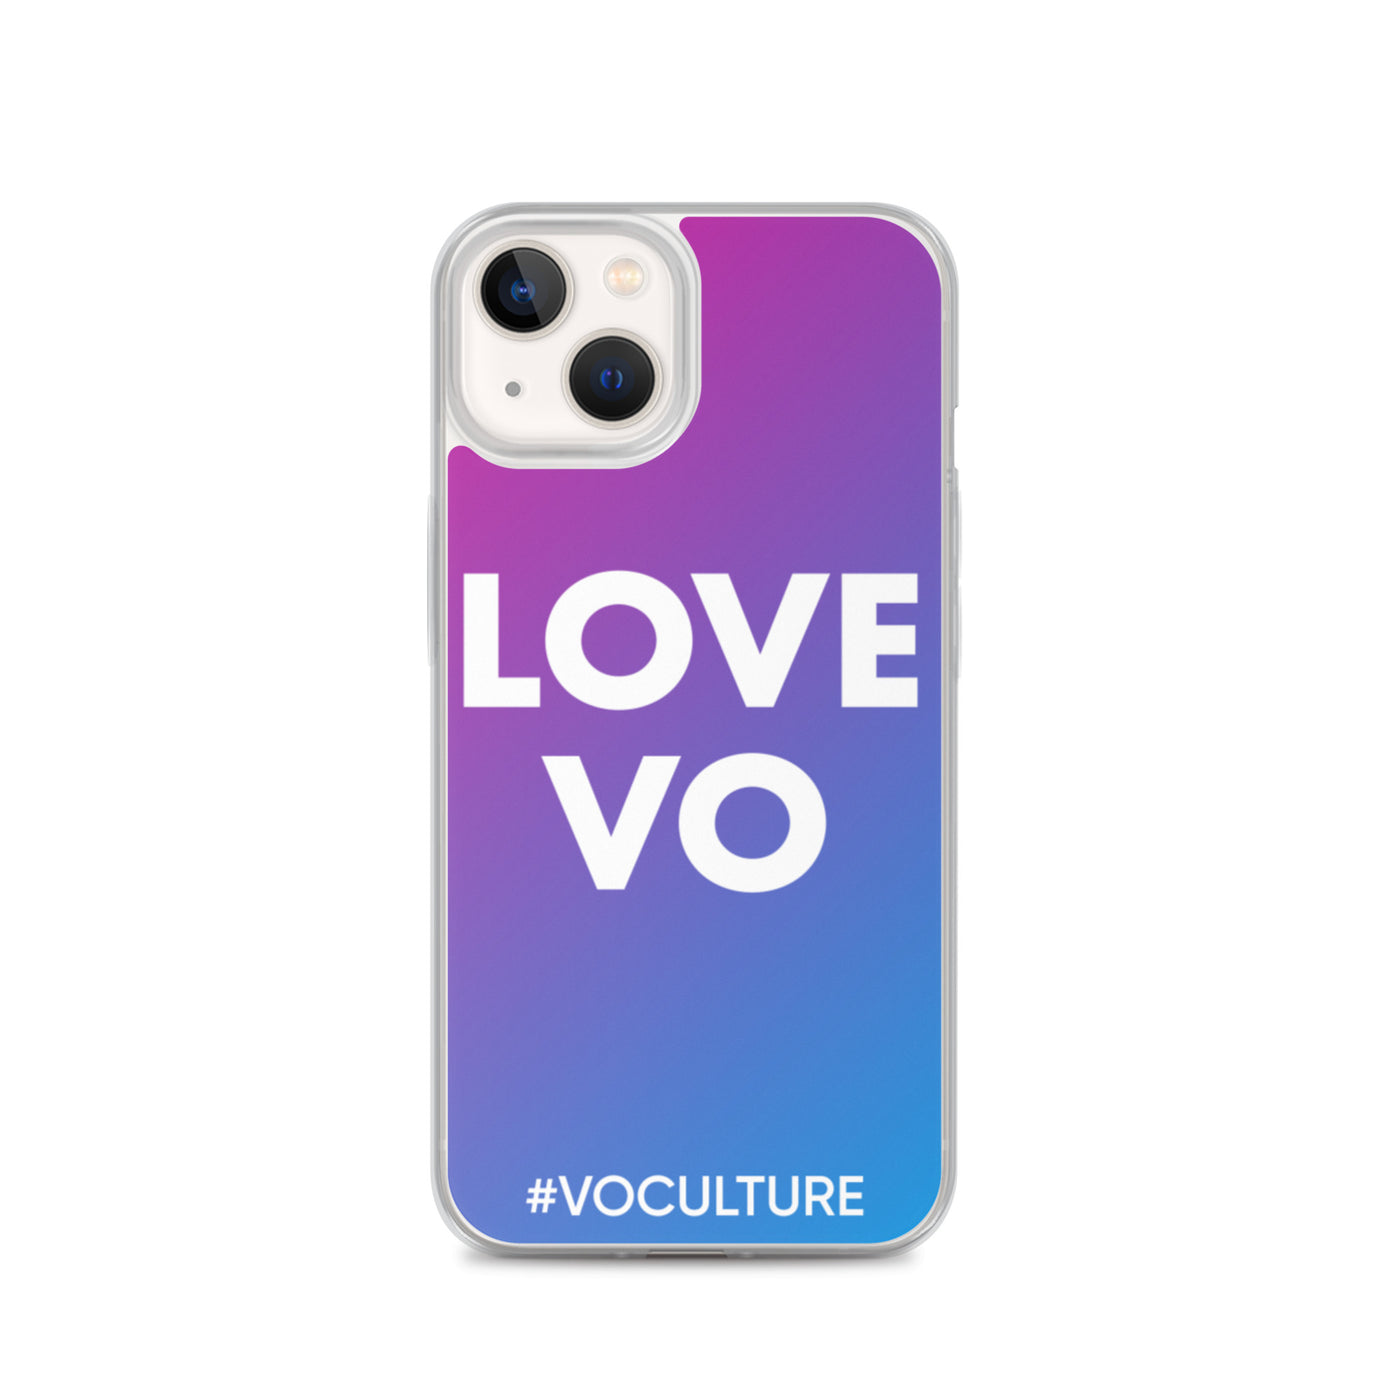 LOVE VO iPhone Case